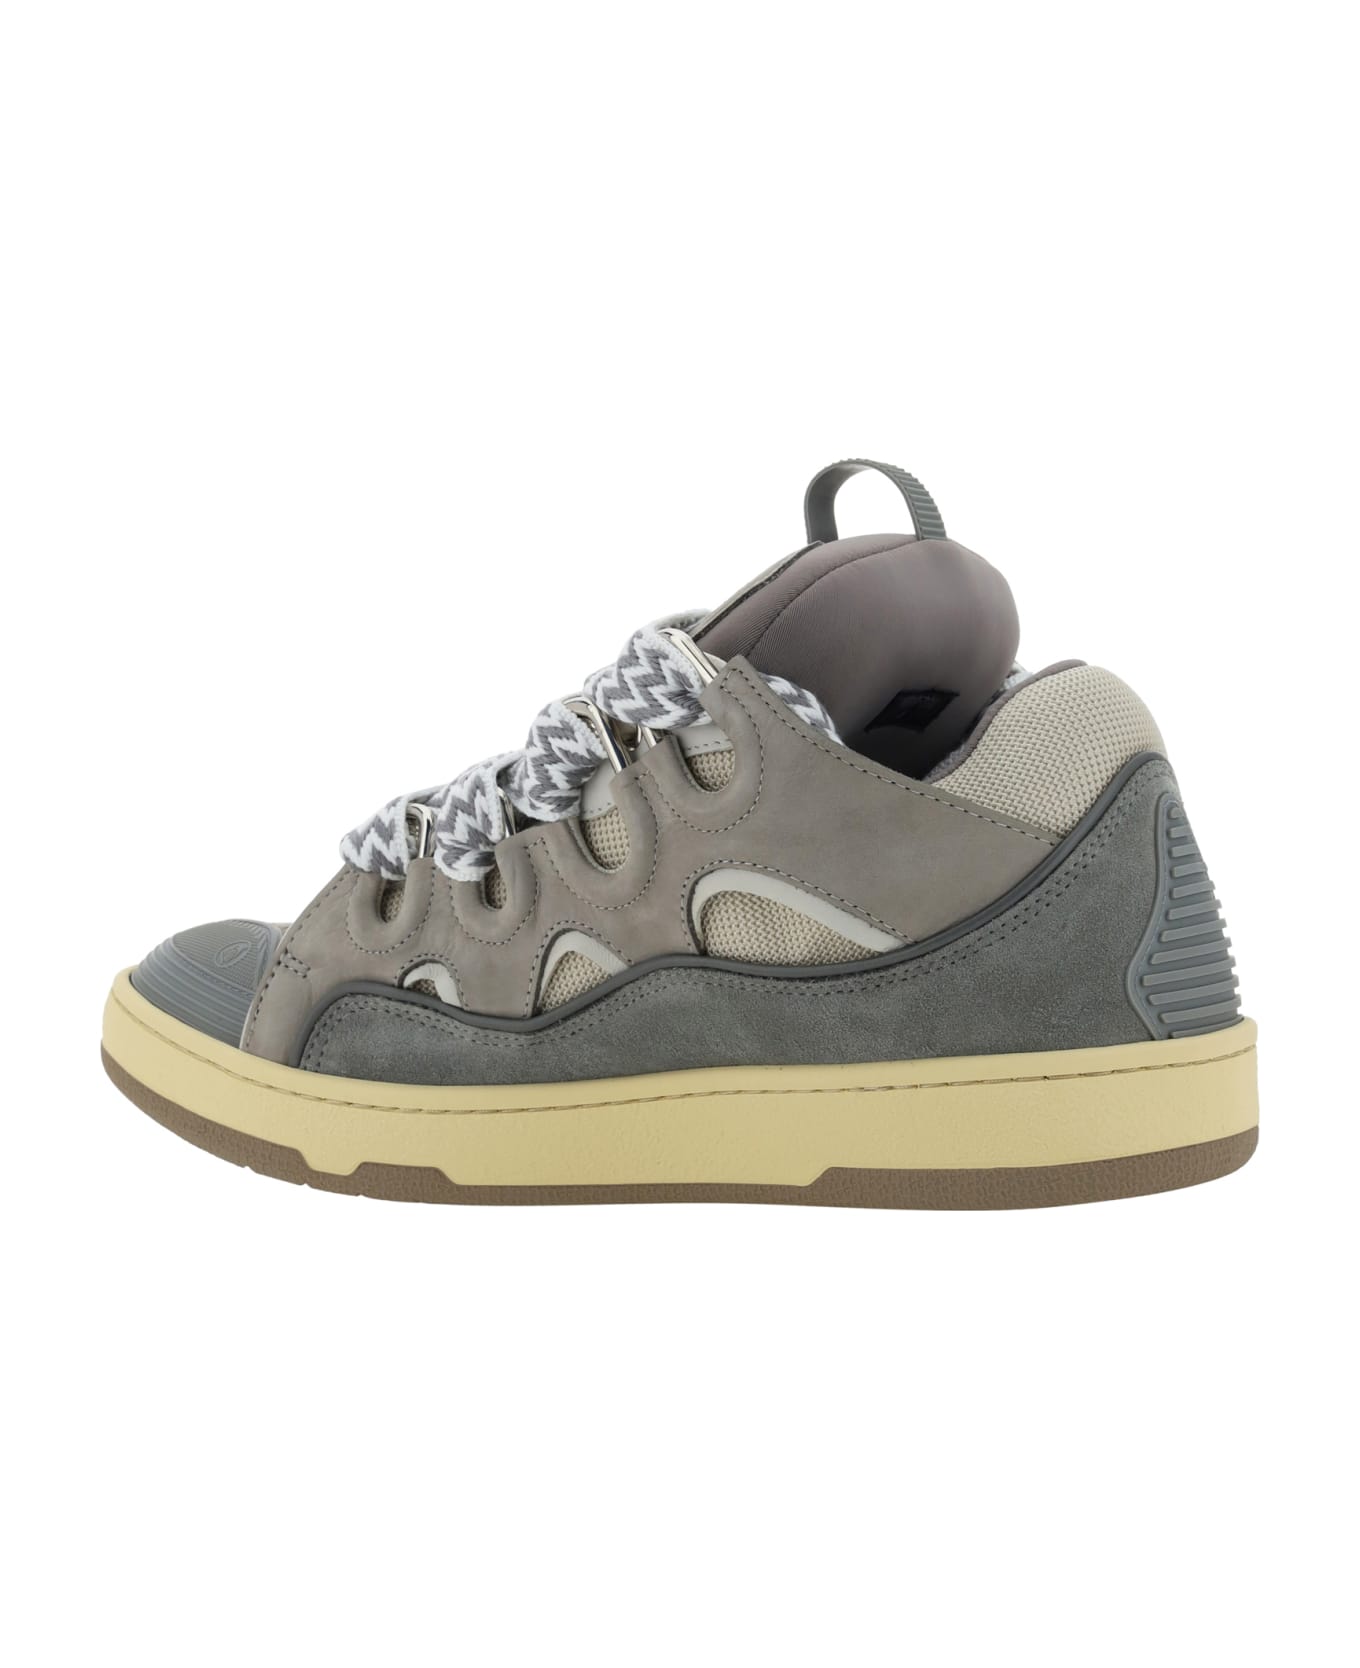 Lanvin Curb Sneakers - Grey 2